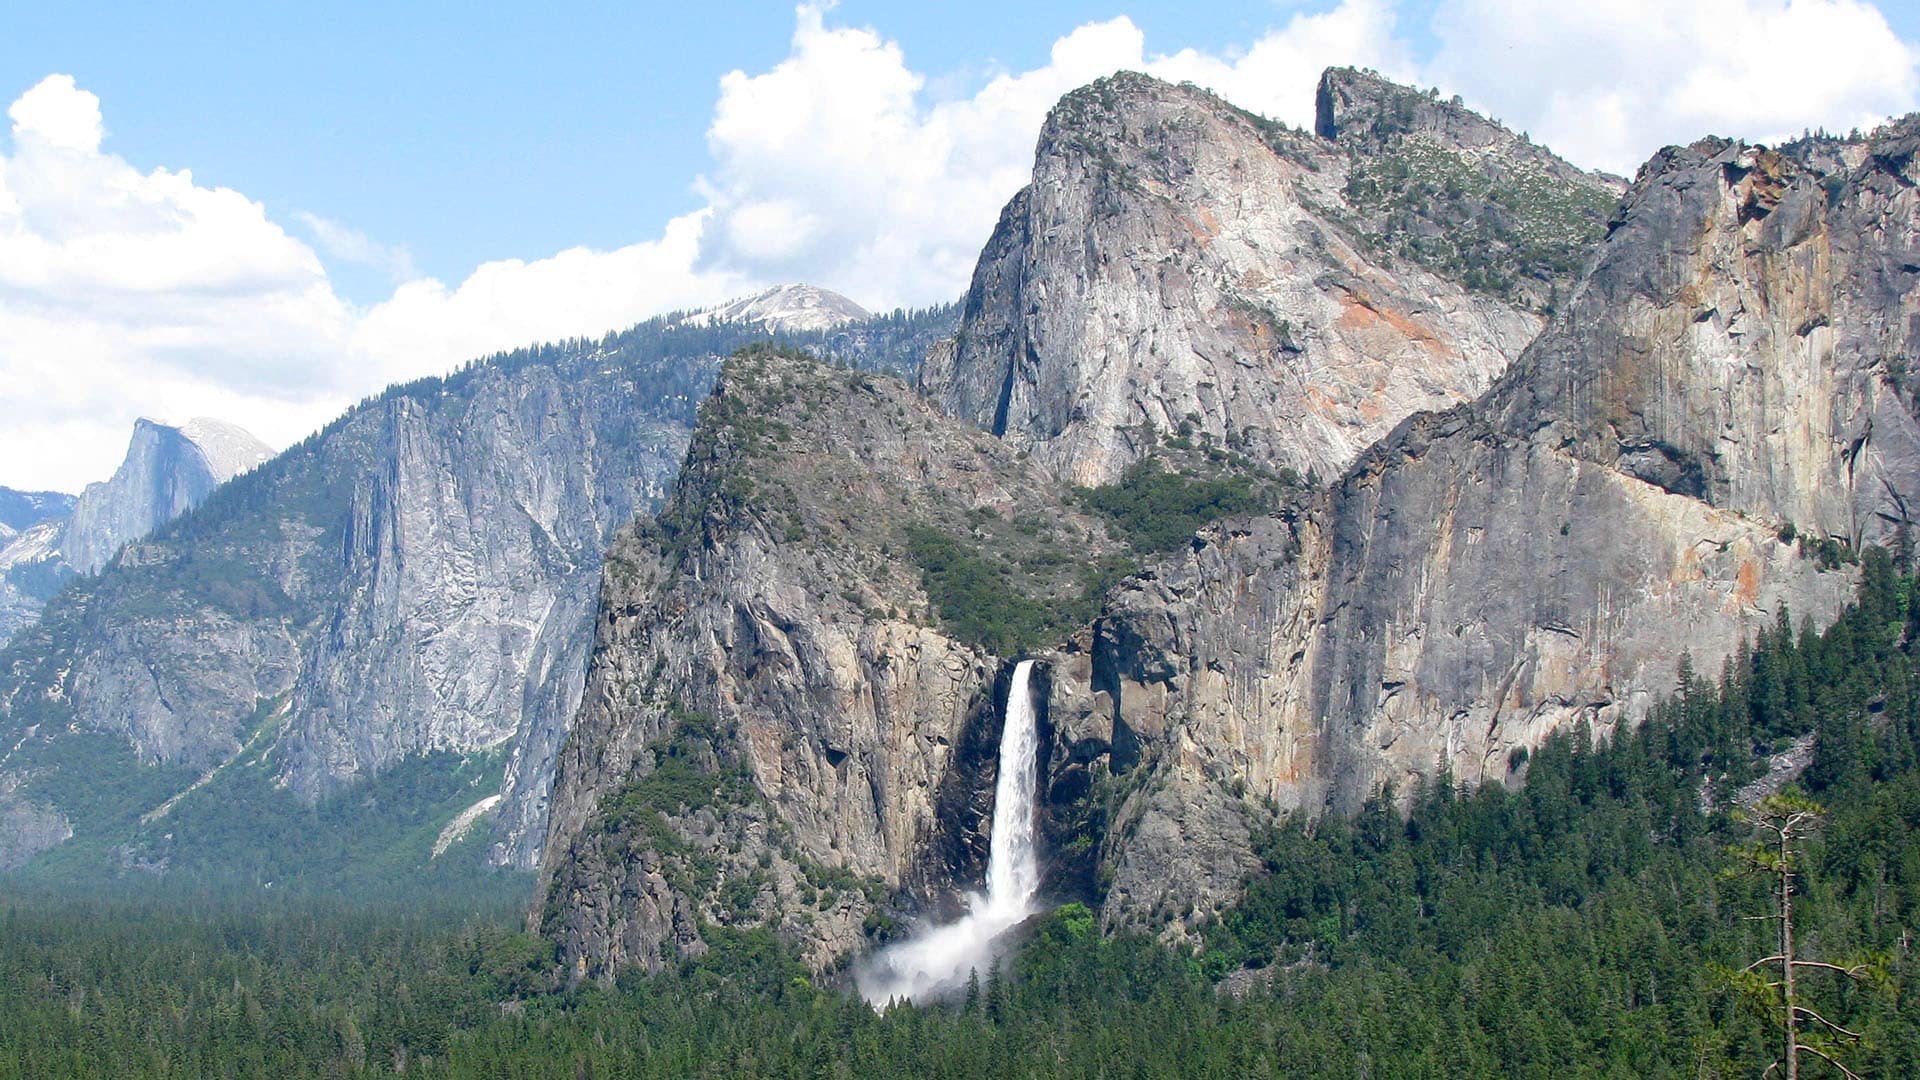 Celebrate The Seasons At Yosemite National Park With Enterprise. Enterprise Rent A Car